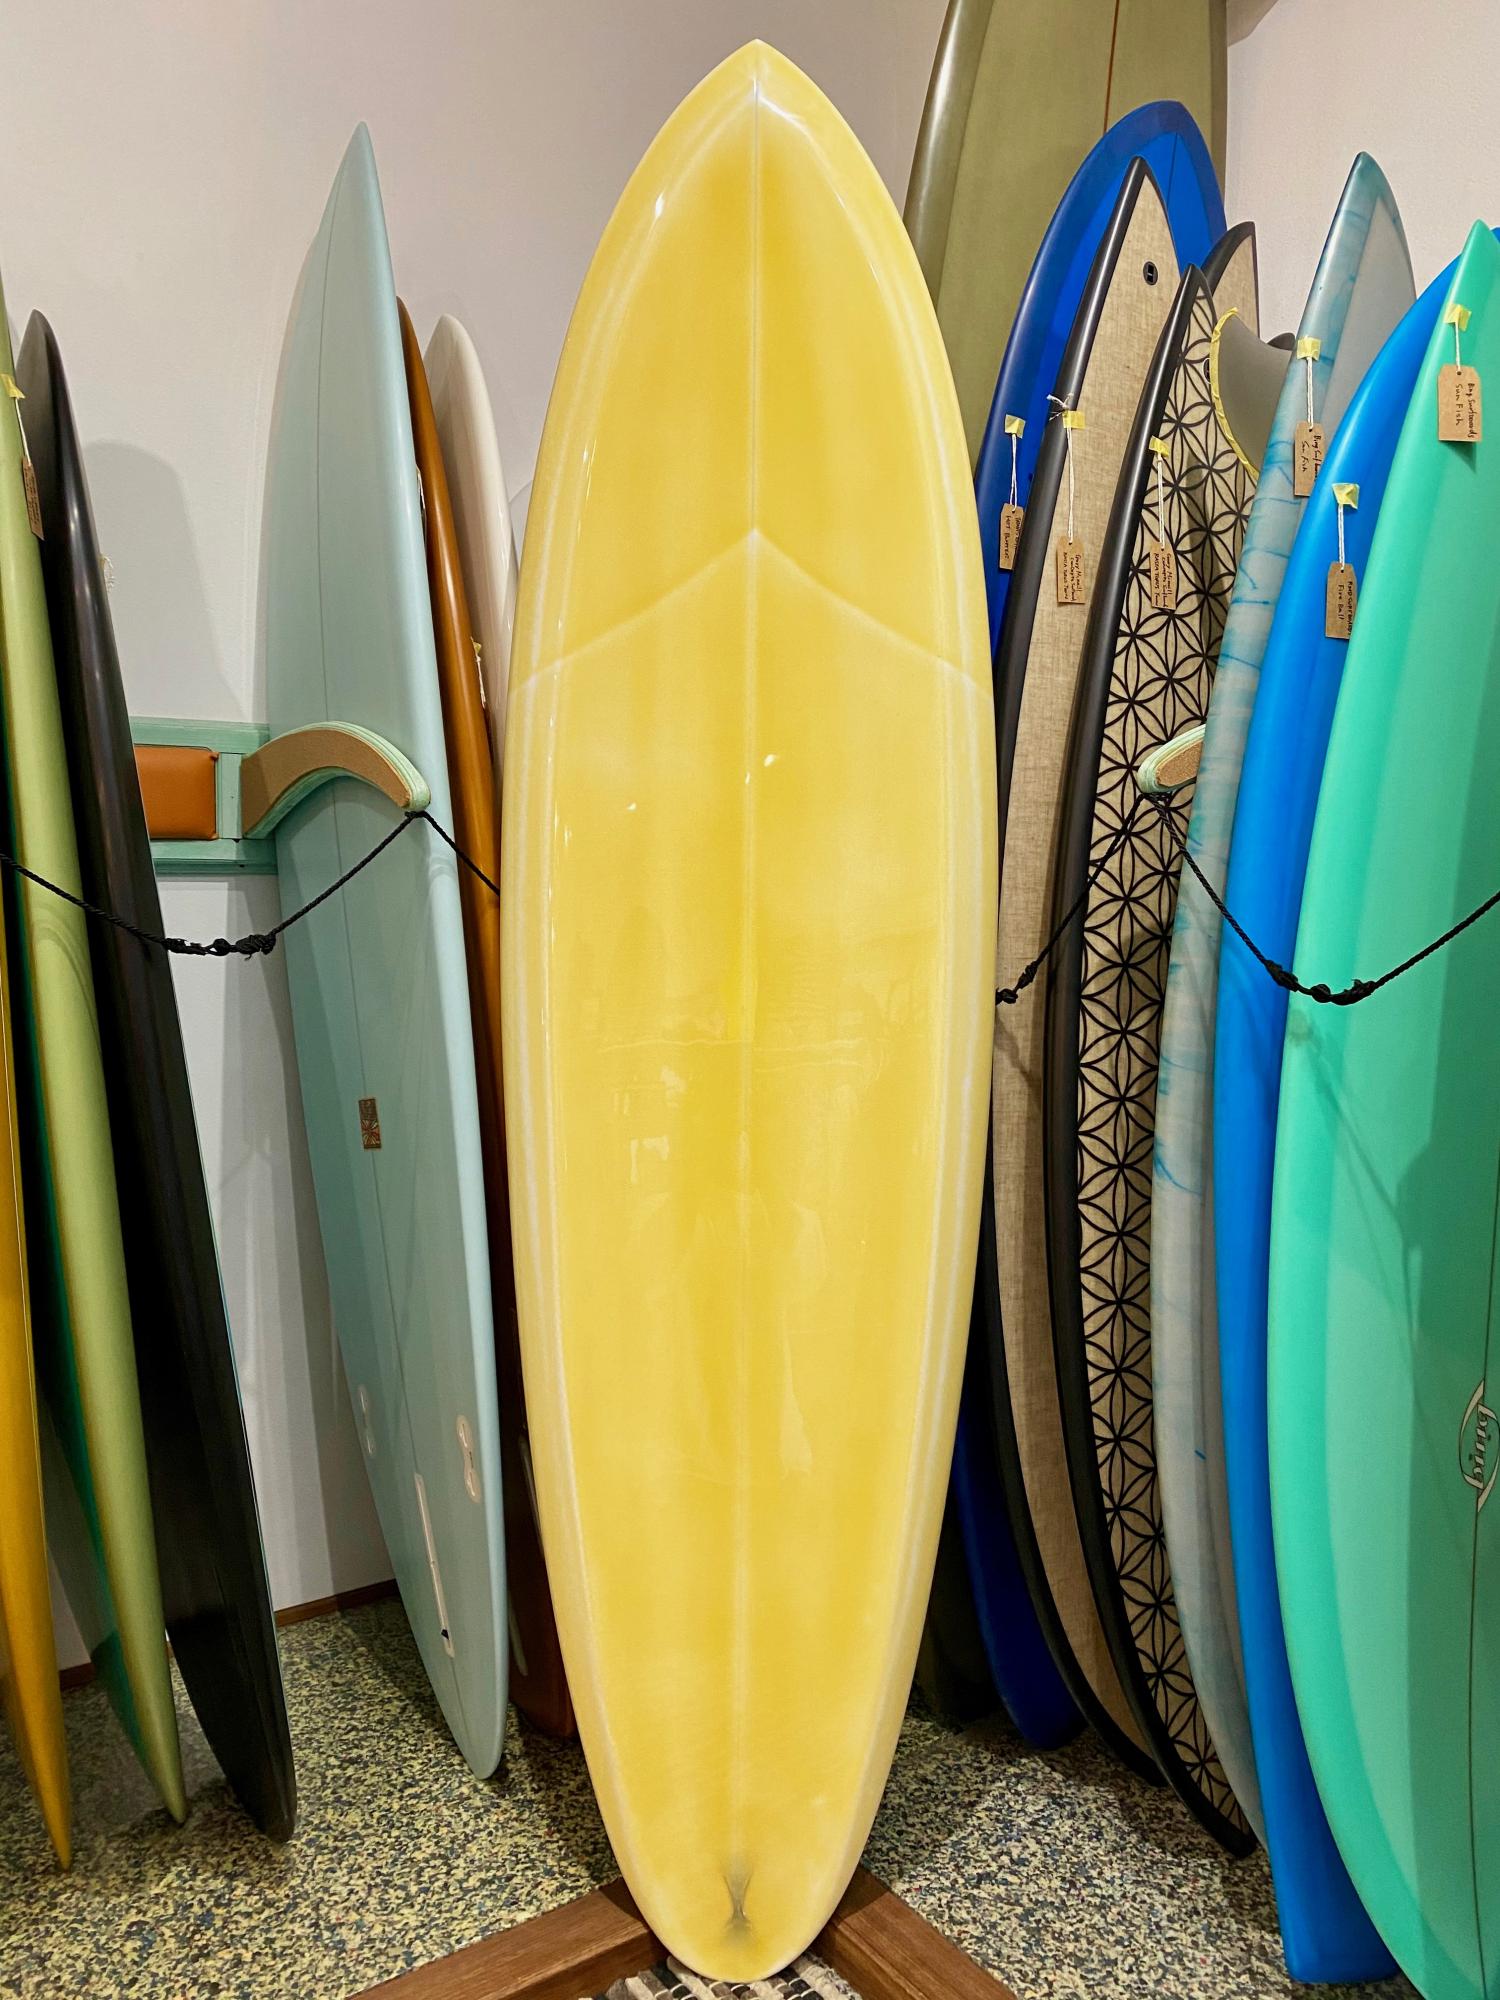 Mccallum Surfboards|Okinawa surf shop YES SURF